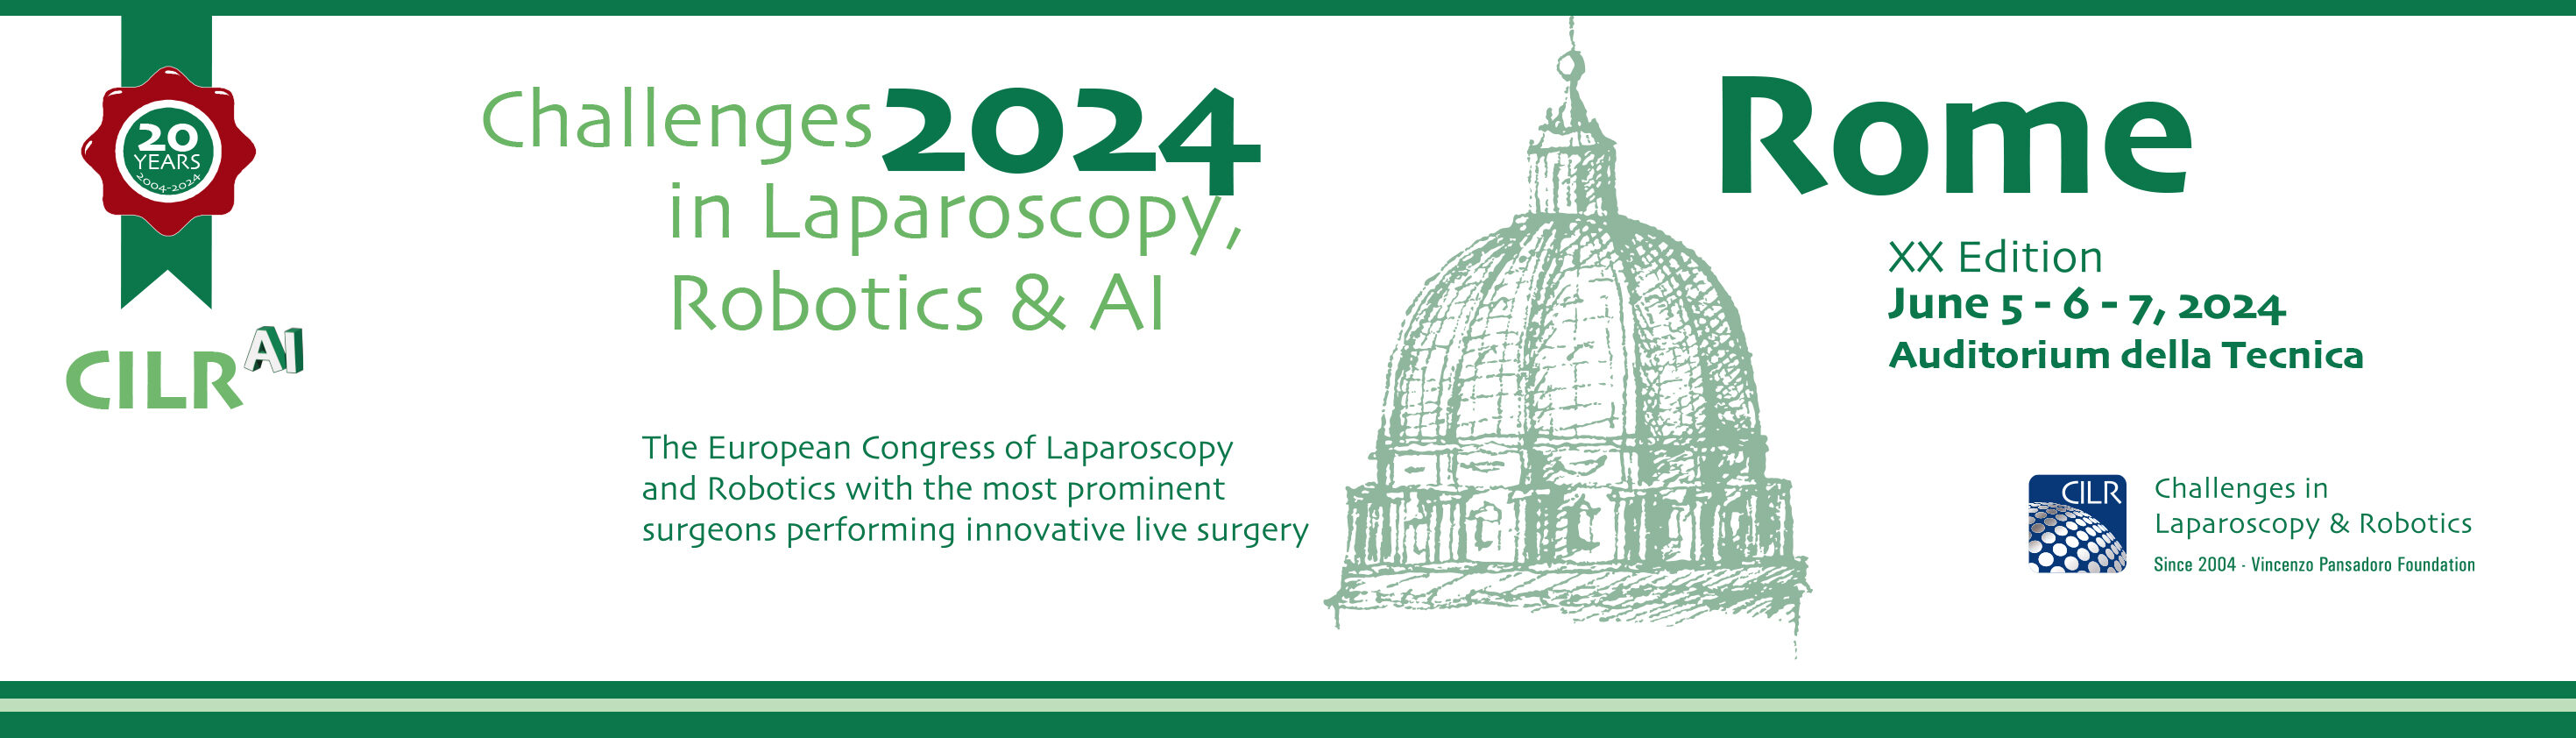 Challenges in Laparoscopy, Robotics & AI